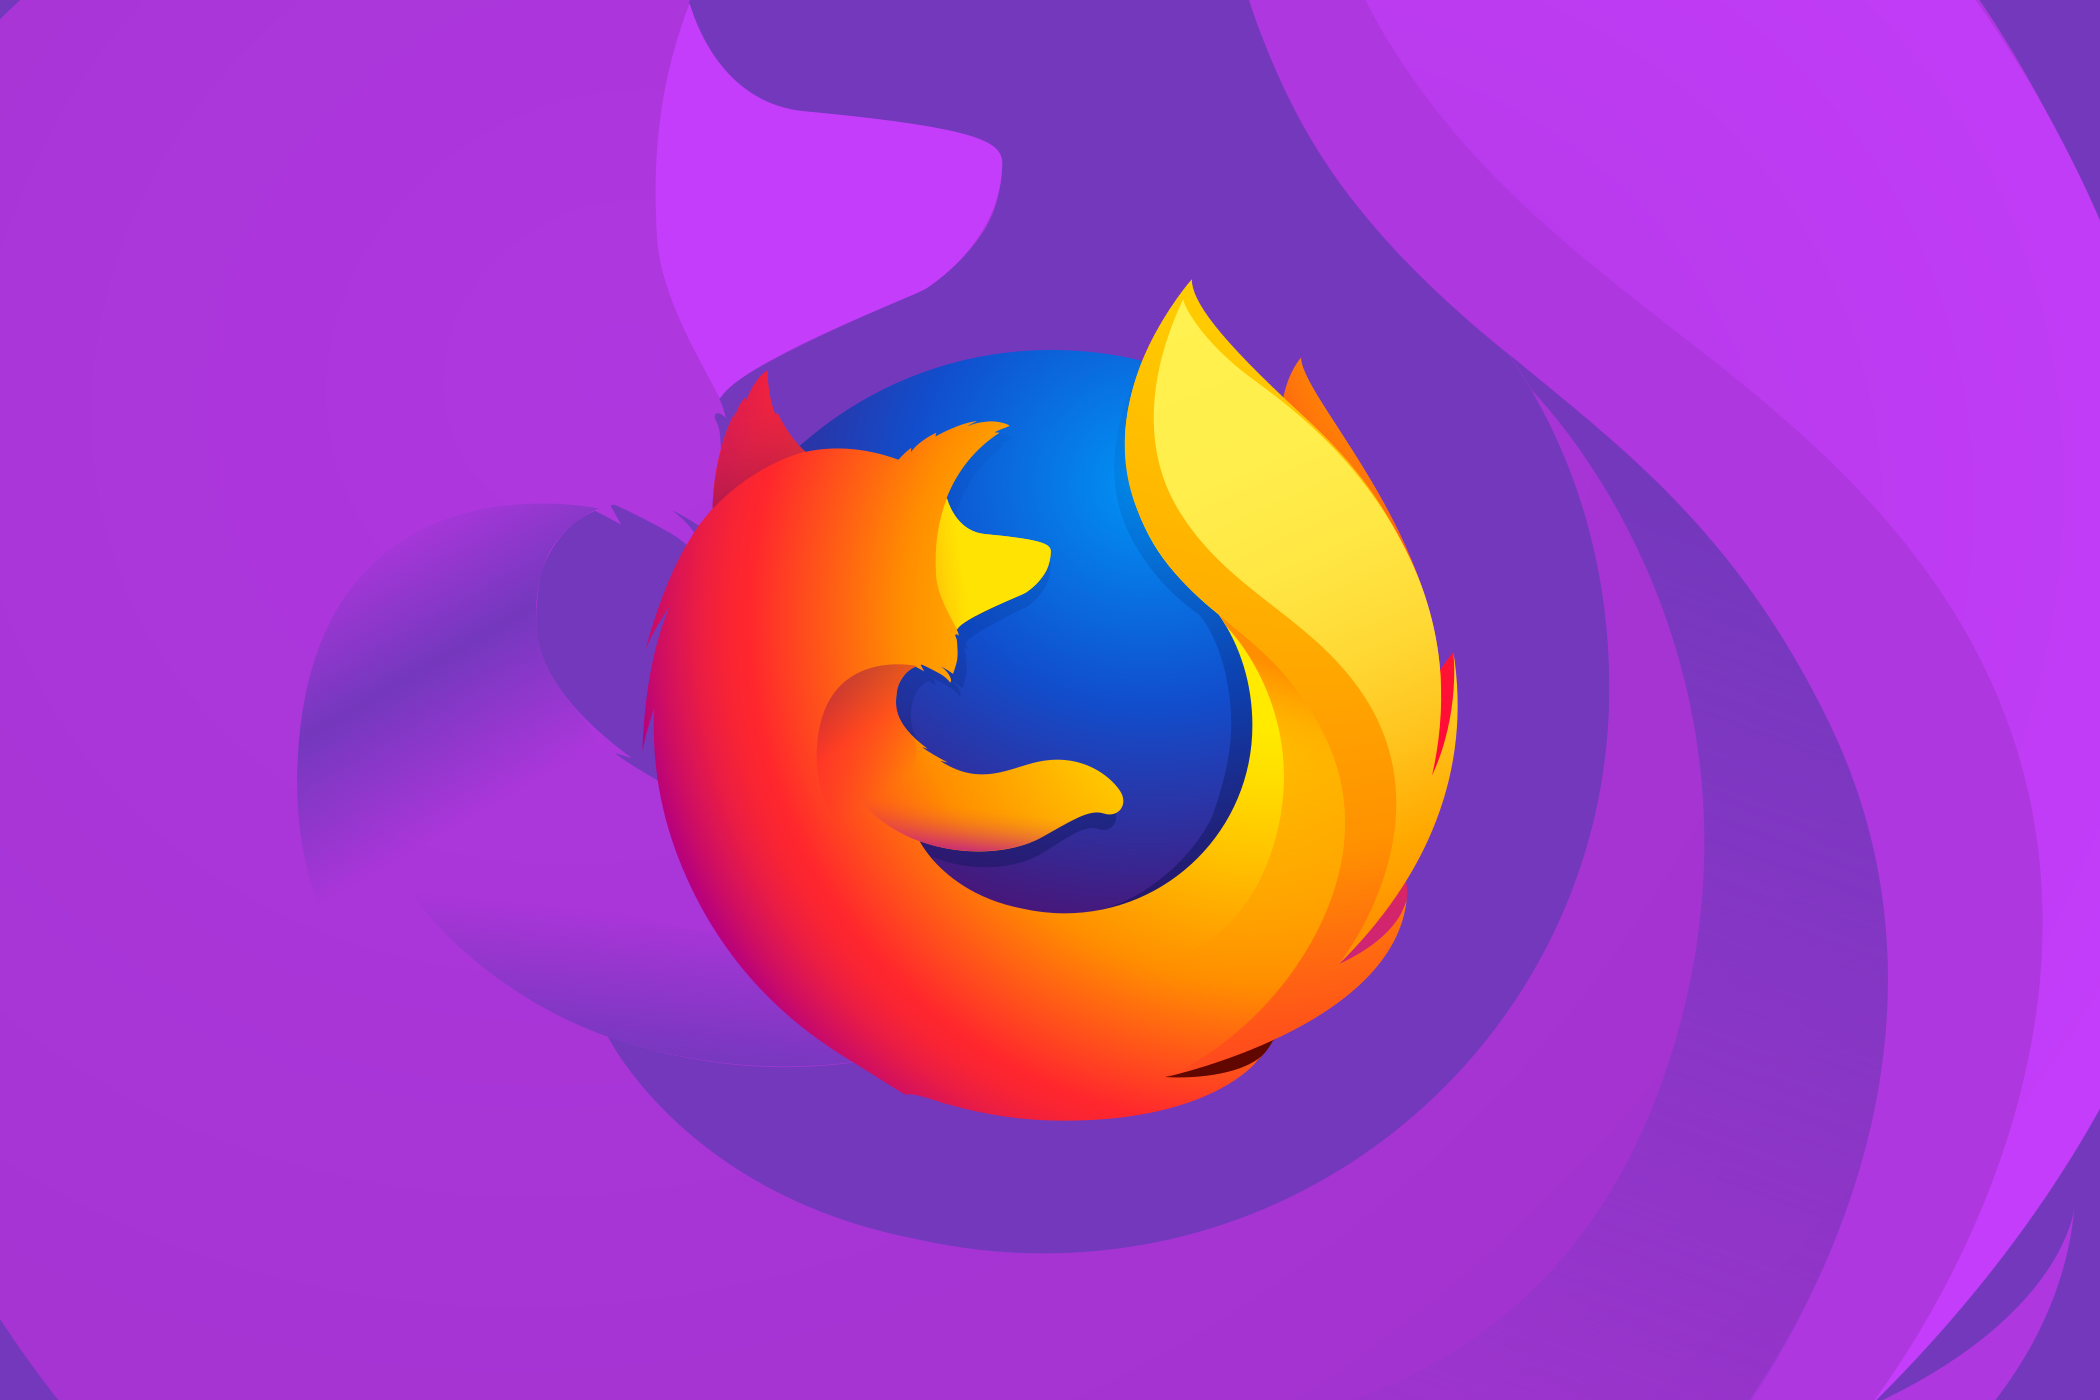 Firefox logo.